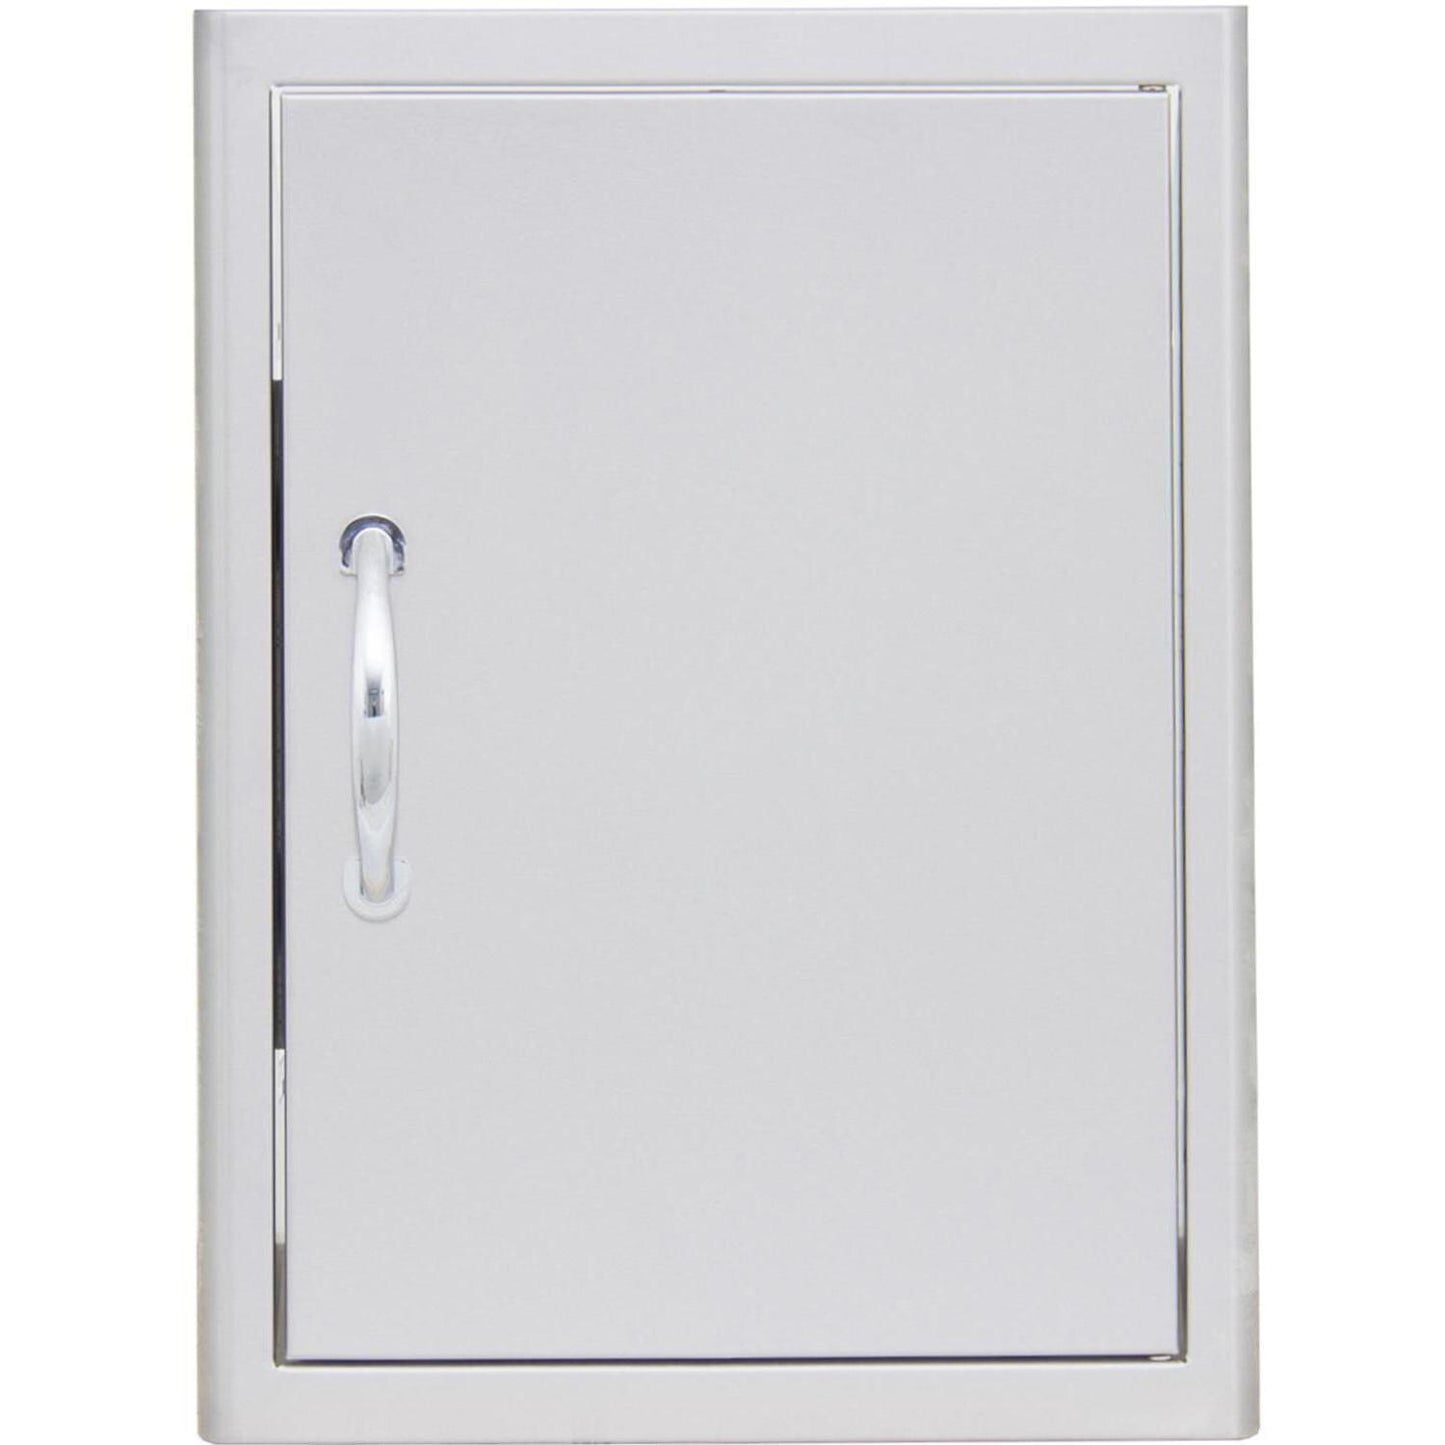 Blaze 21-Inch Stainless Steel Single Access Door - Vertical - BLZ-SINGLE-2417-R